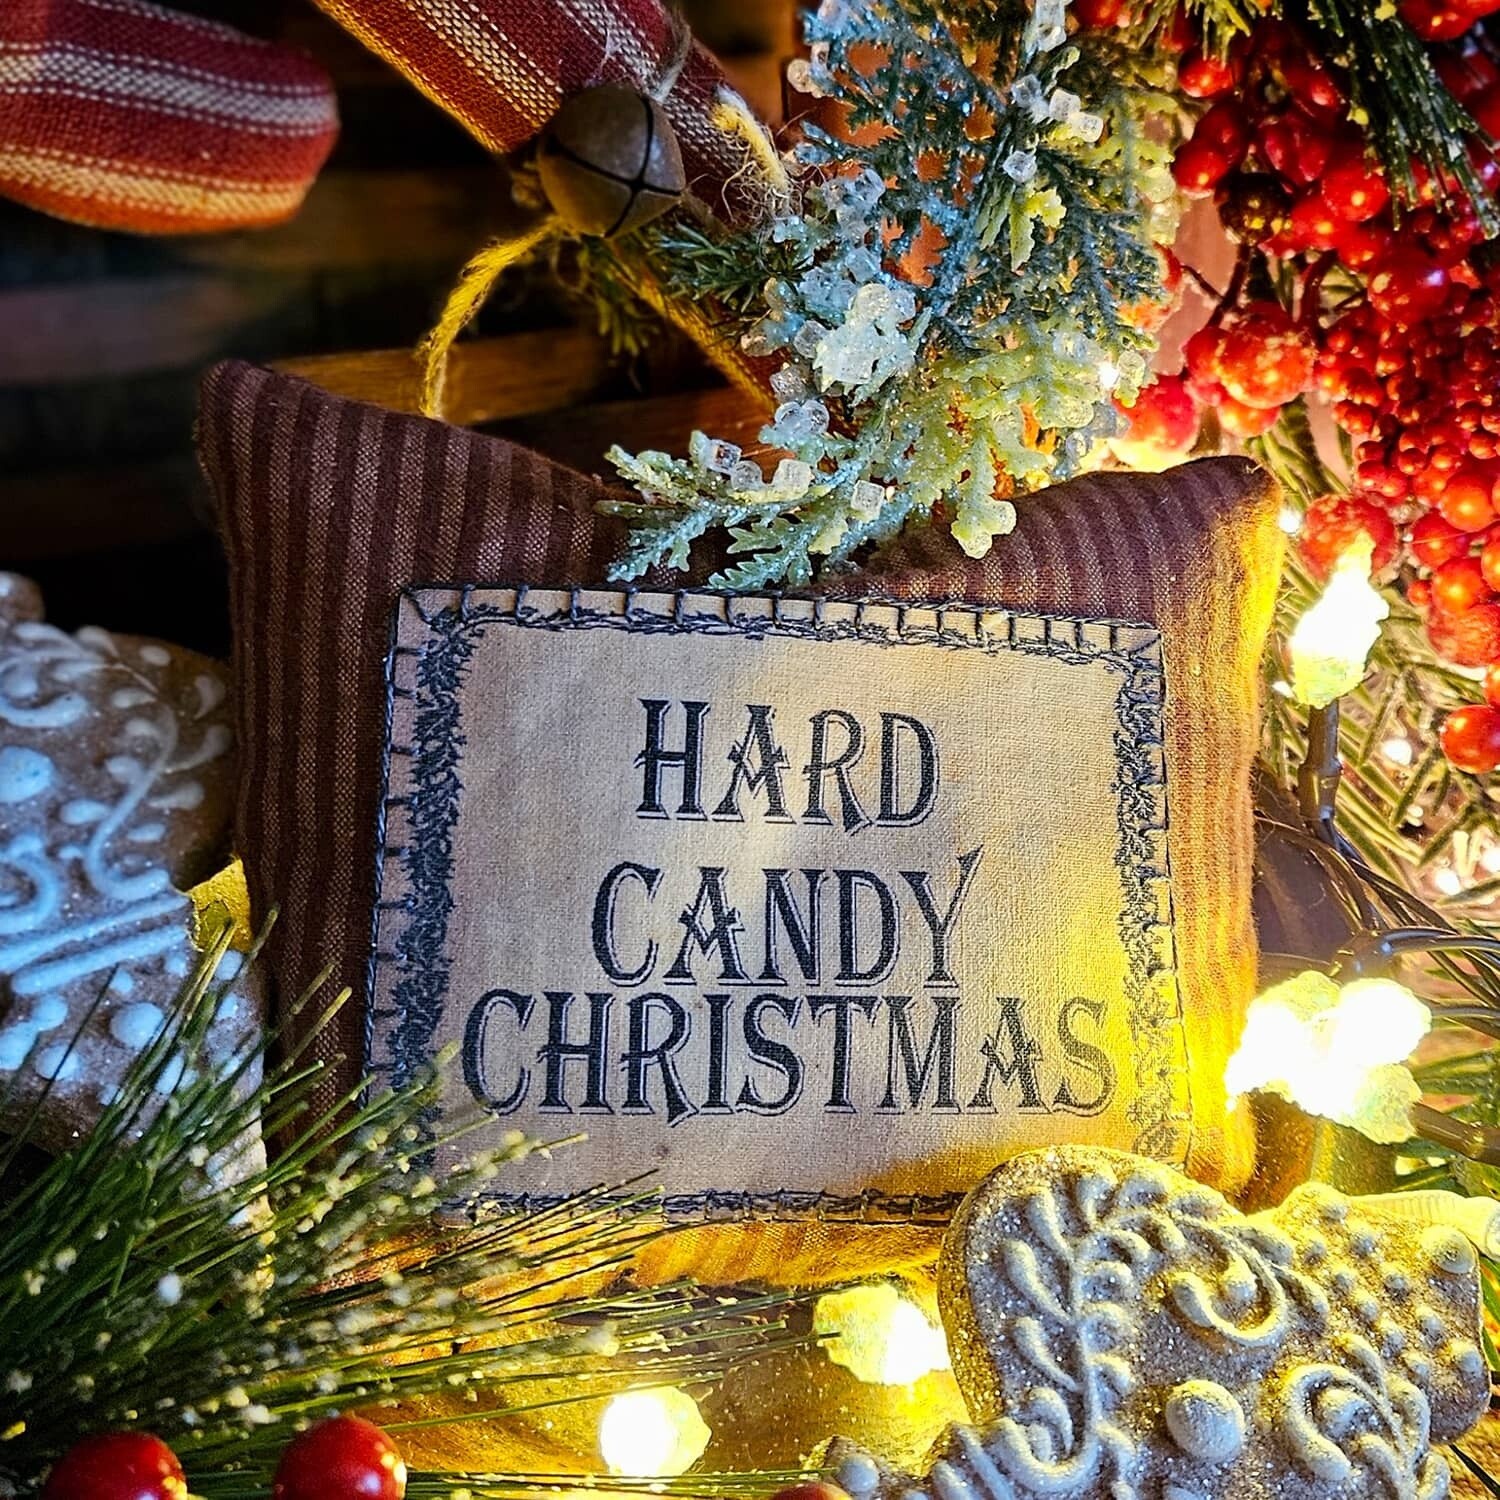 Christmas Bowl Filler Pillow Hard Candy